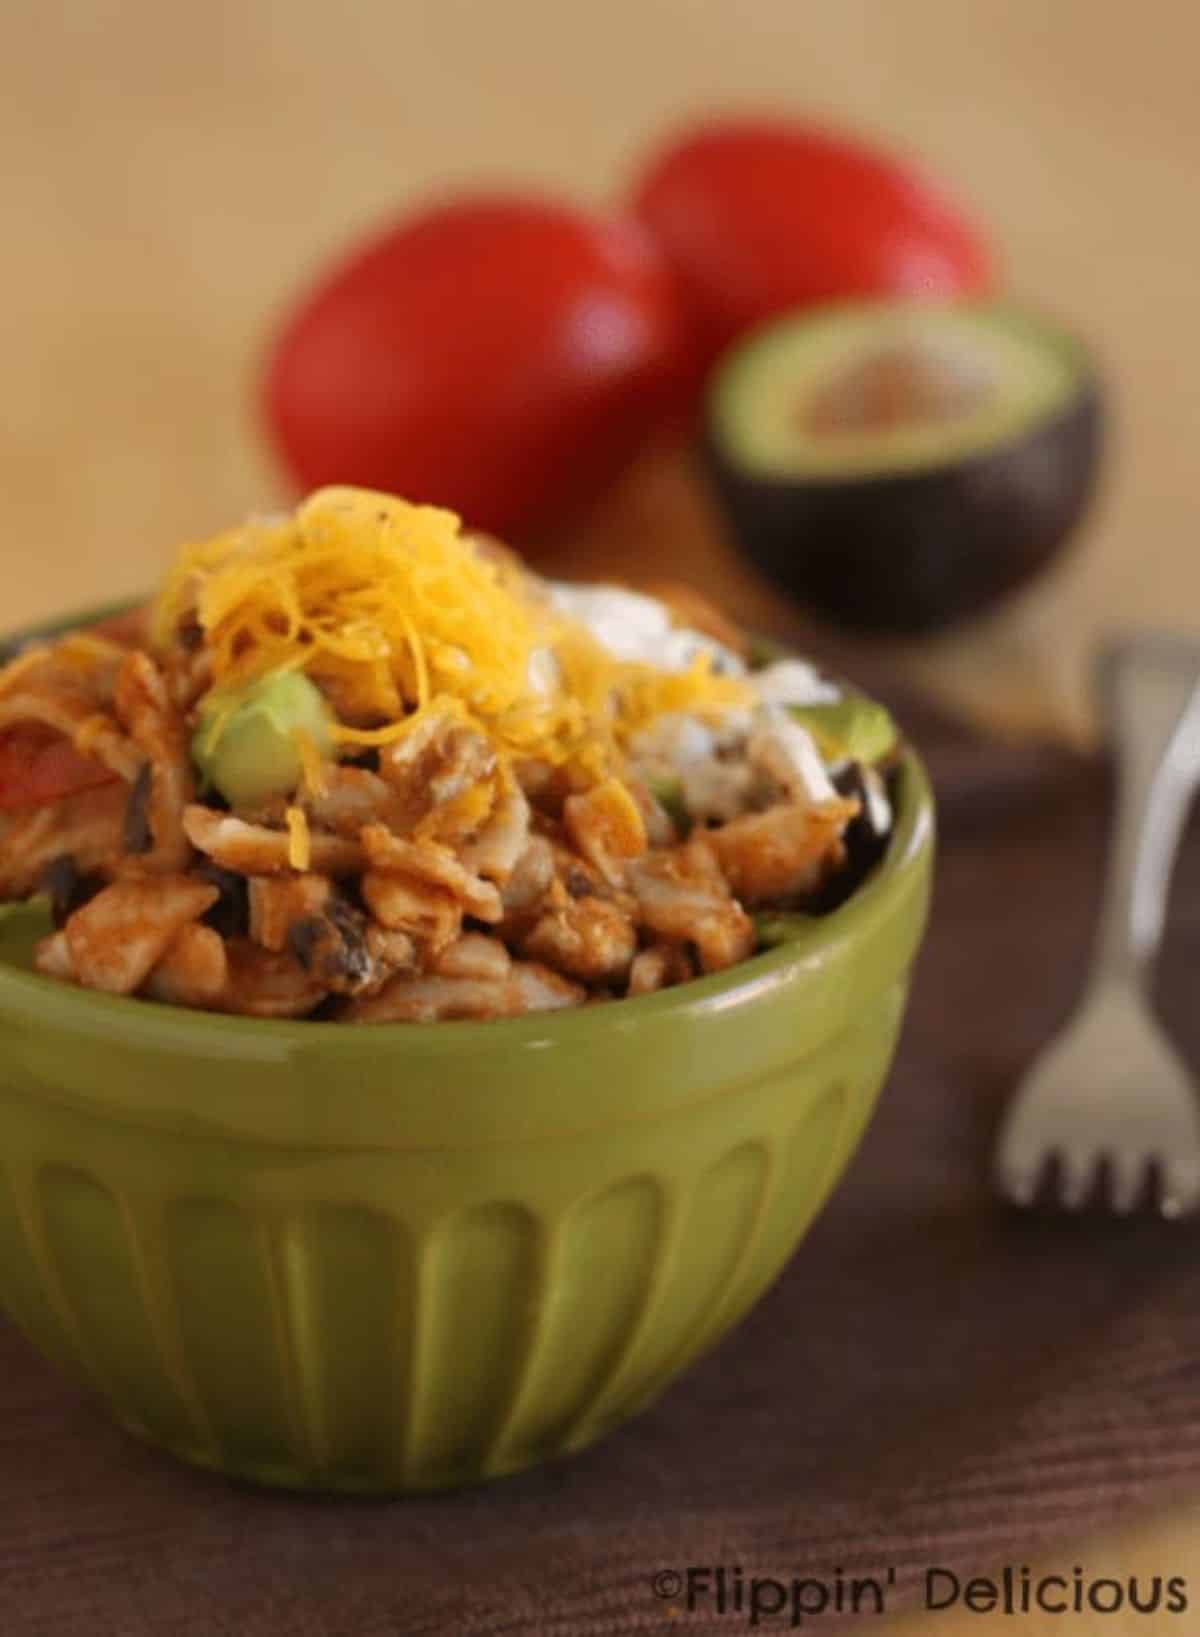 Gluten-free One-pot Chicken Taco Pasta in a green bowl.